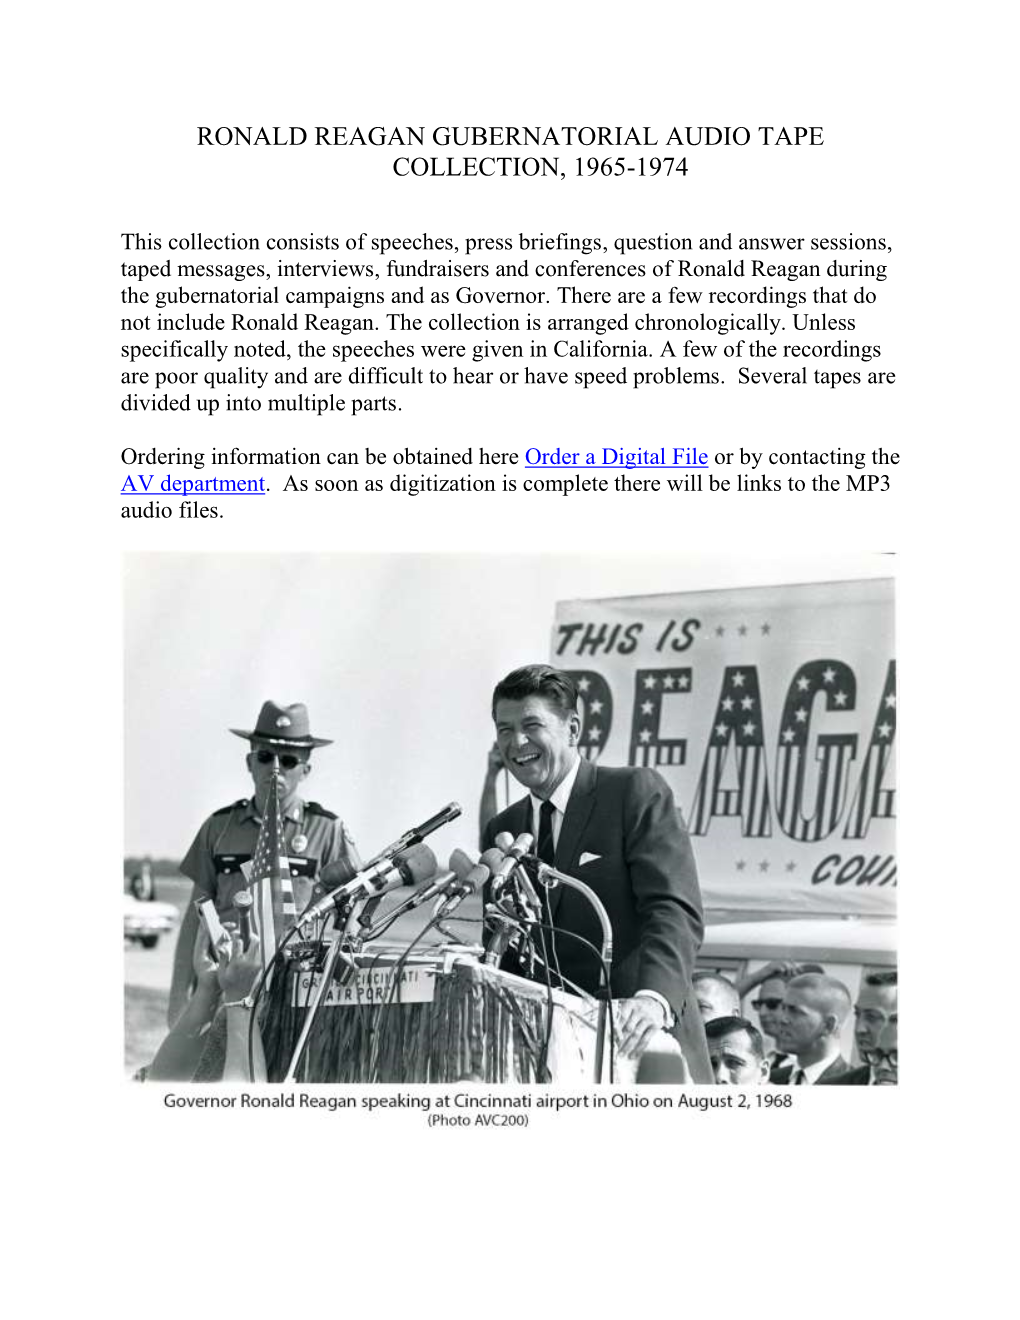 Ronald Reagan Gubernatorial Audio Tape Collection, 1965-1974